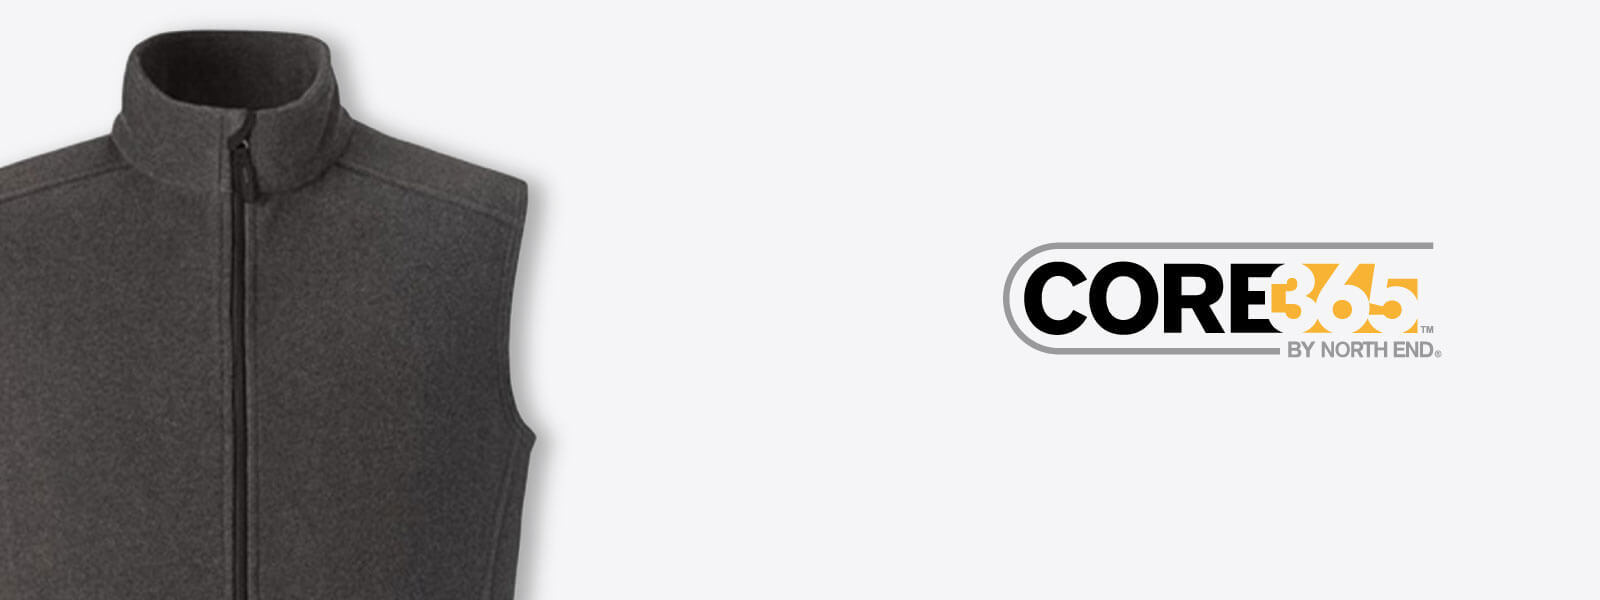 Customize Core 365. Custom Fleece Jacket. Core 365 Vest. Core 365 Clothing. Custom Embroidered Vest.